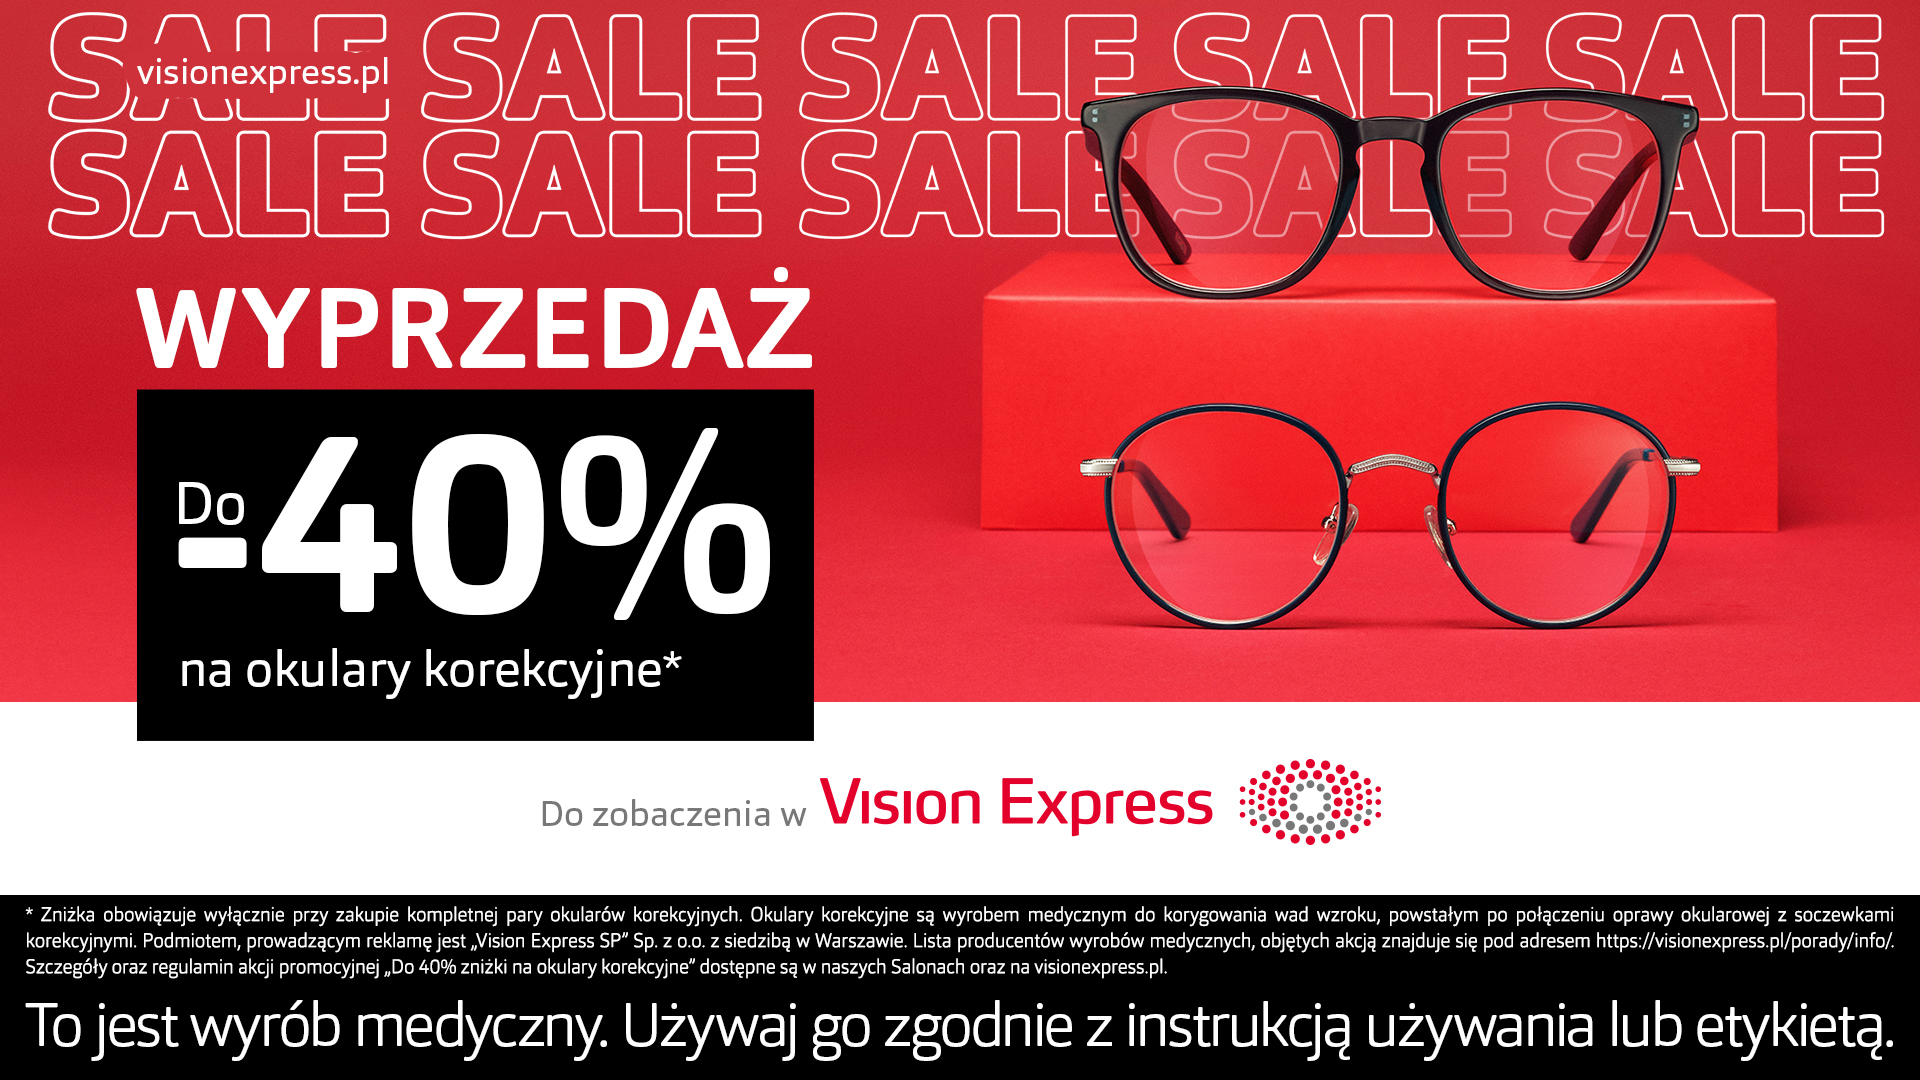 okulary,vision express,okazja, OKULARY KOREKCYJNE NAWET DO 40% TANIEJ w Vision Express!